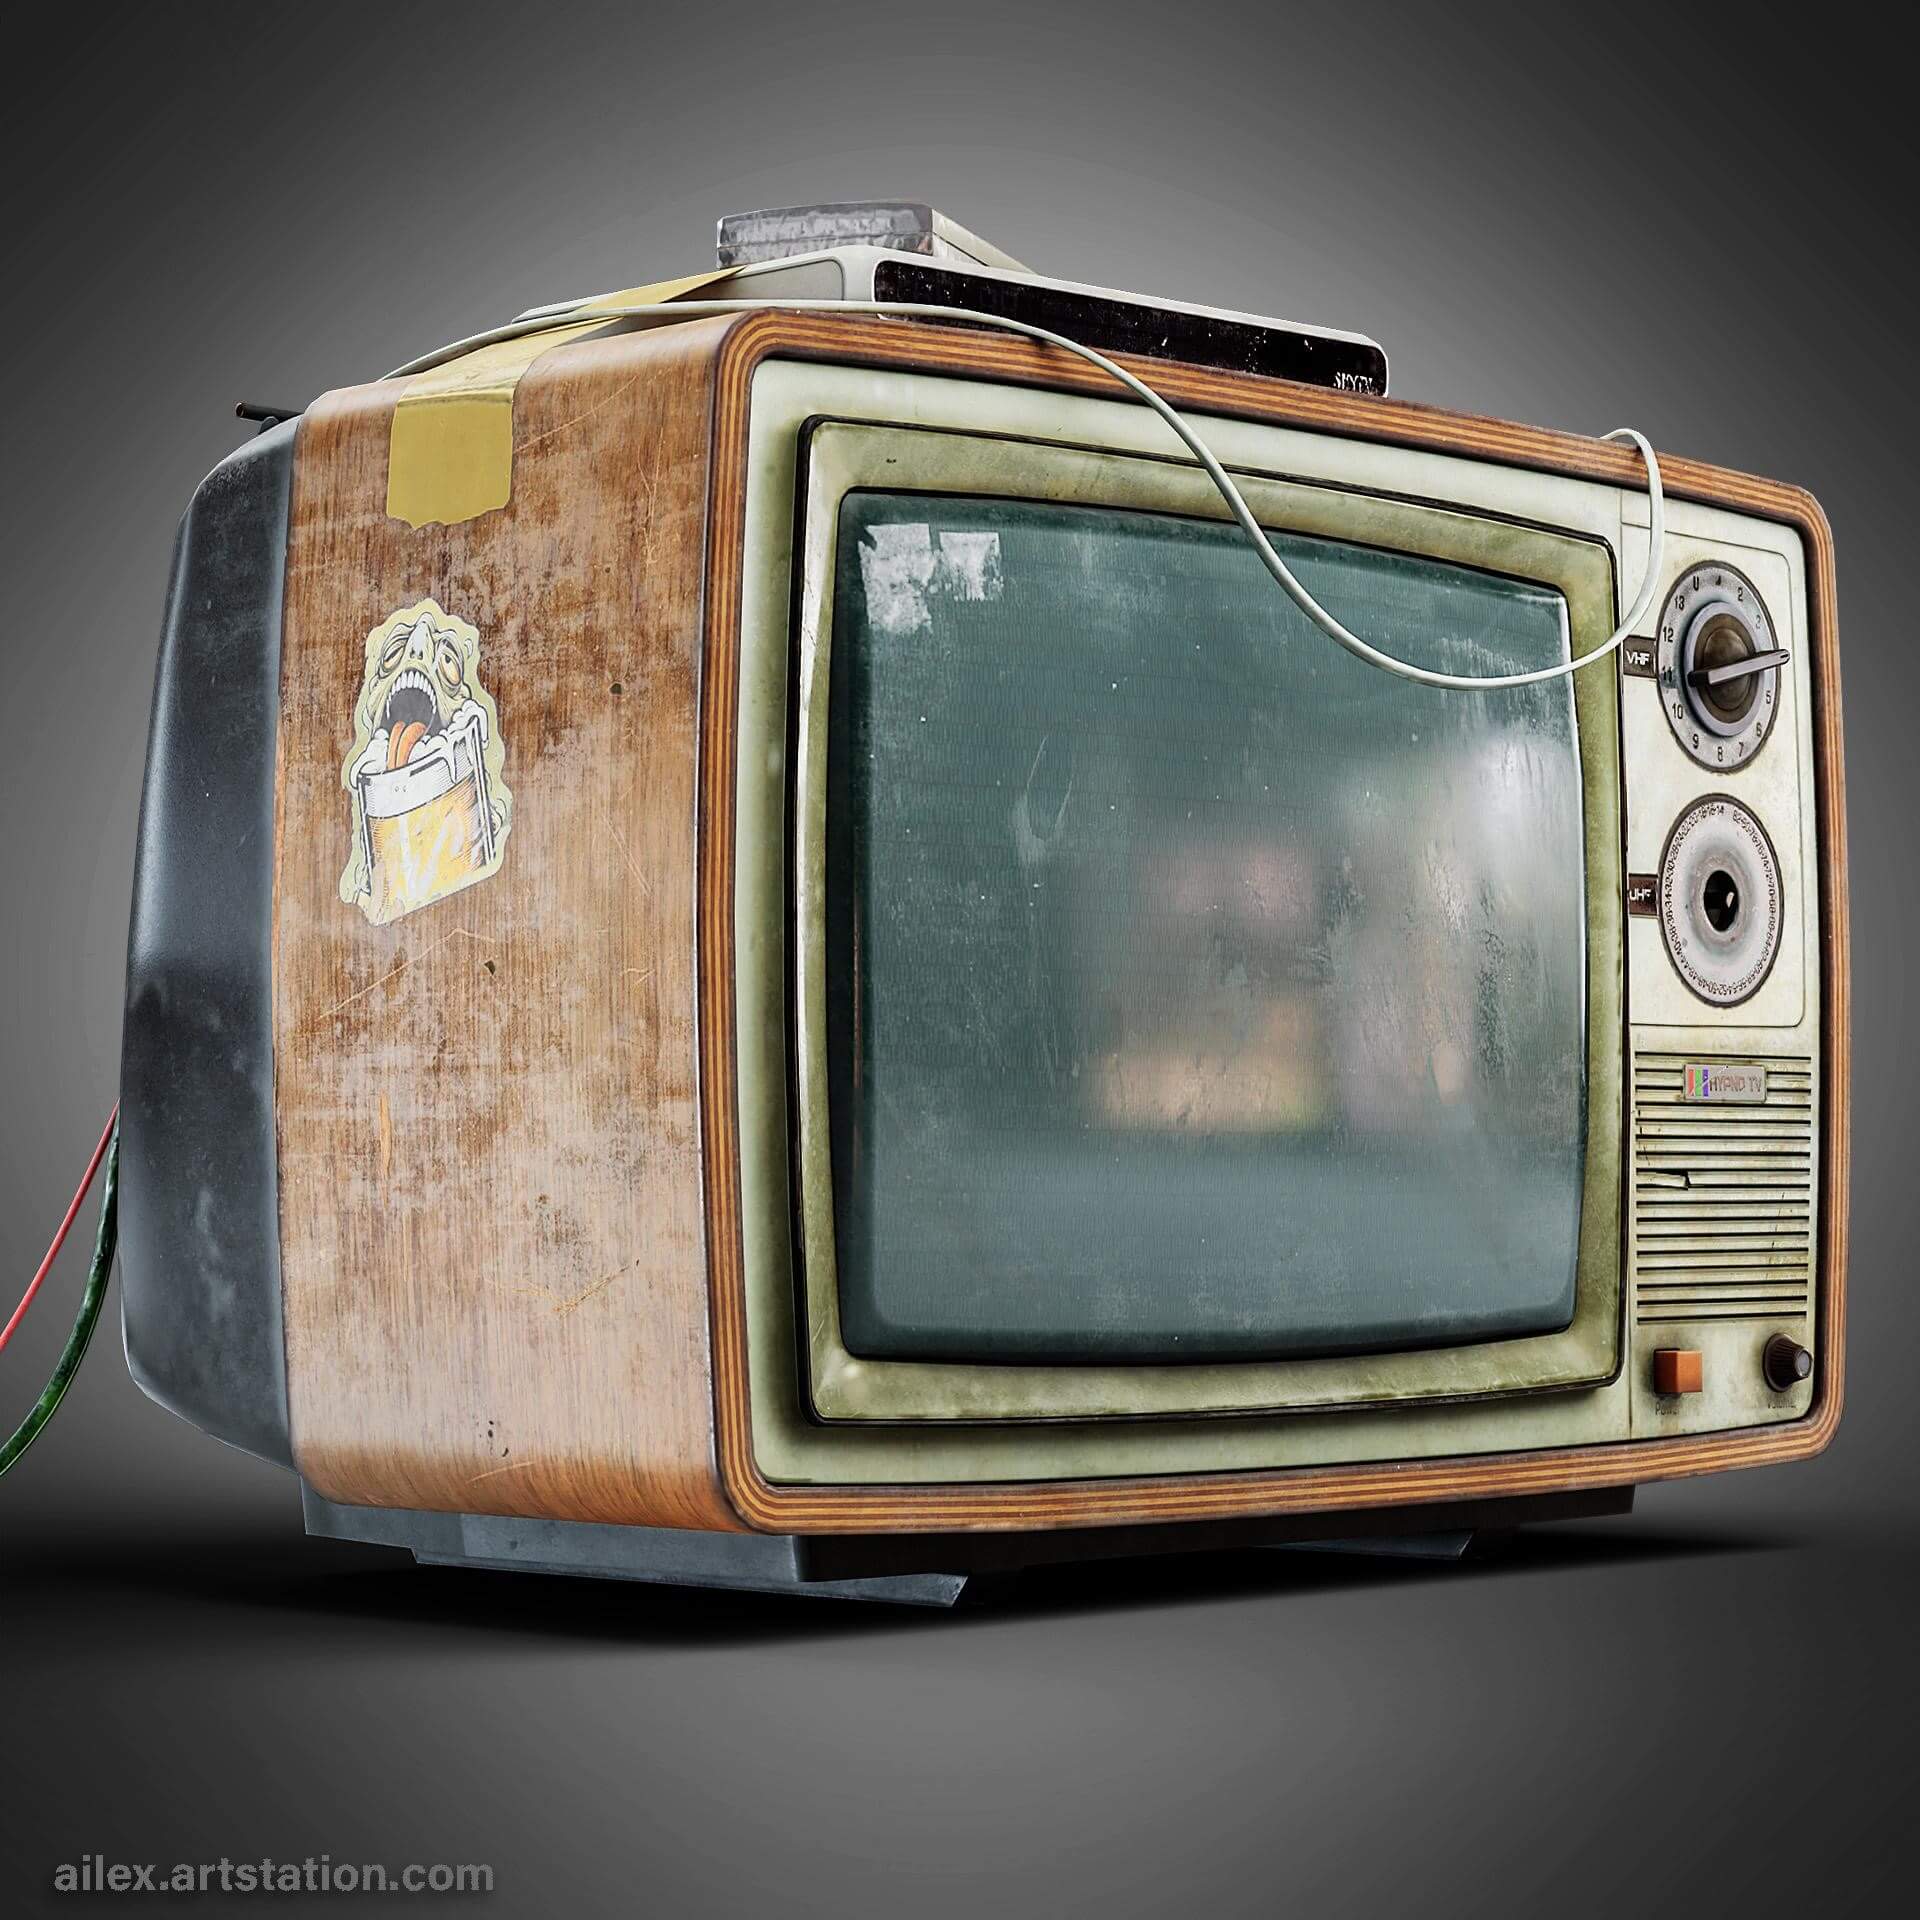 Blender制作一个老旧的便携电视机